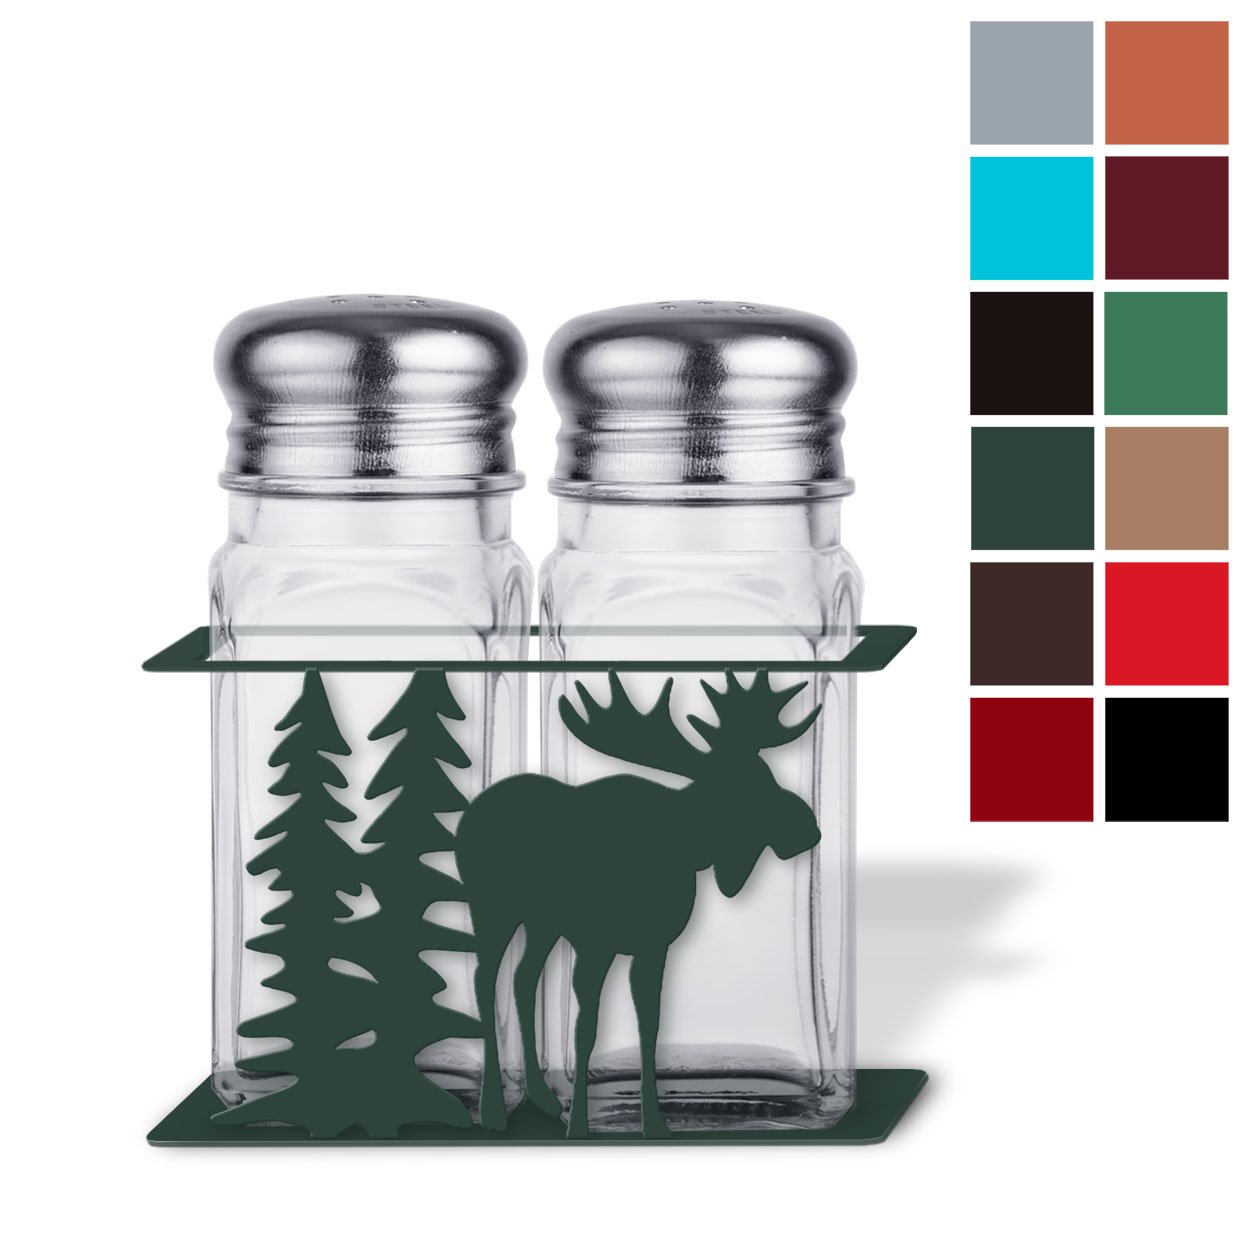 621316 - Moose and Trees Metal Salt and Pepper Shaker Set - Choose Color